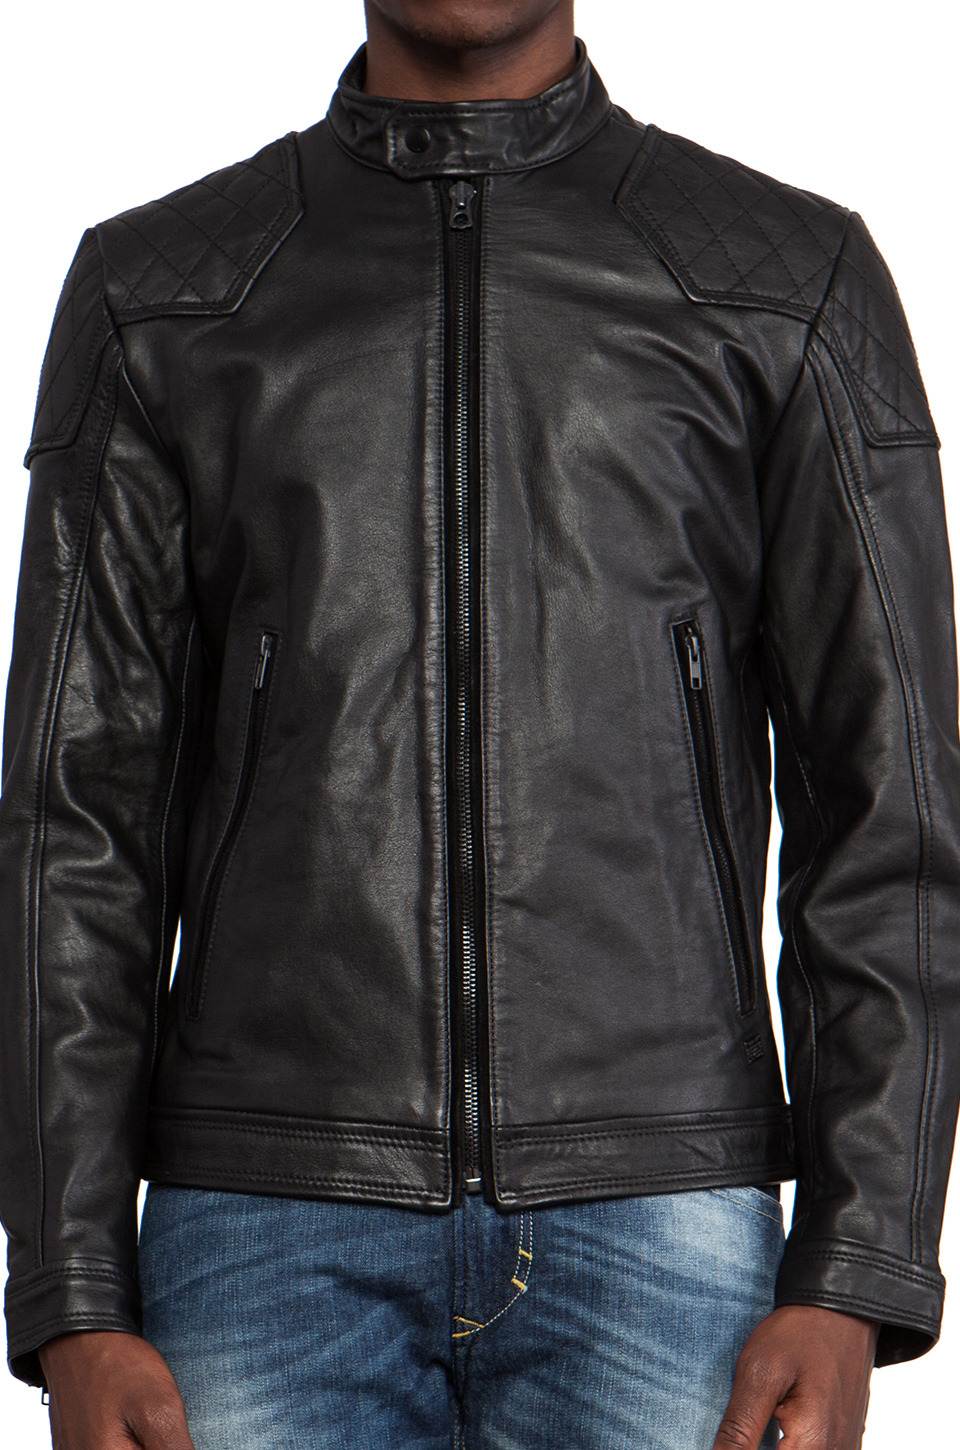 Lyst - Diesel Laleta Leather Jacket in Black for Men